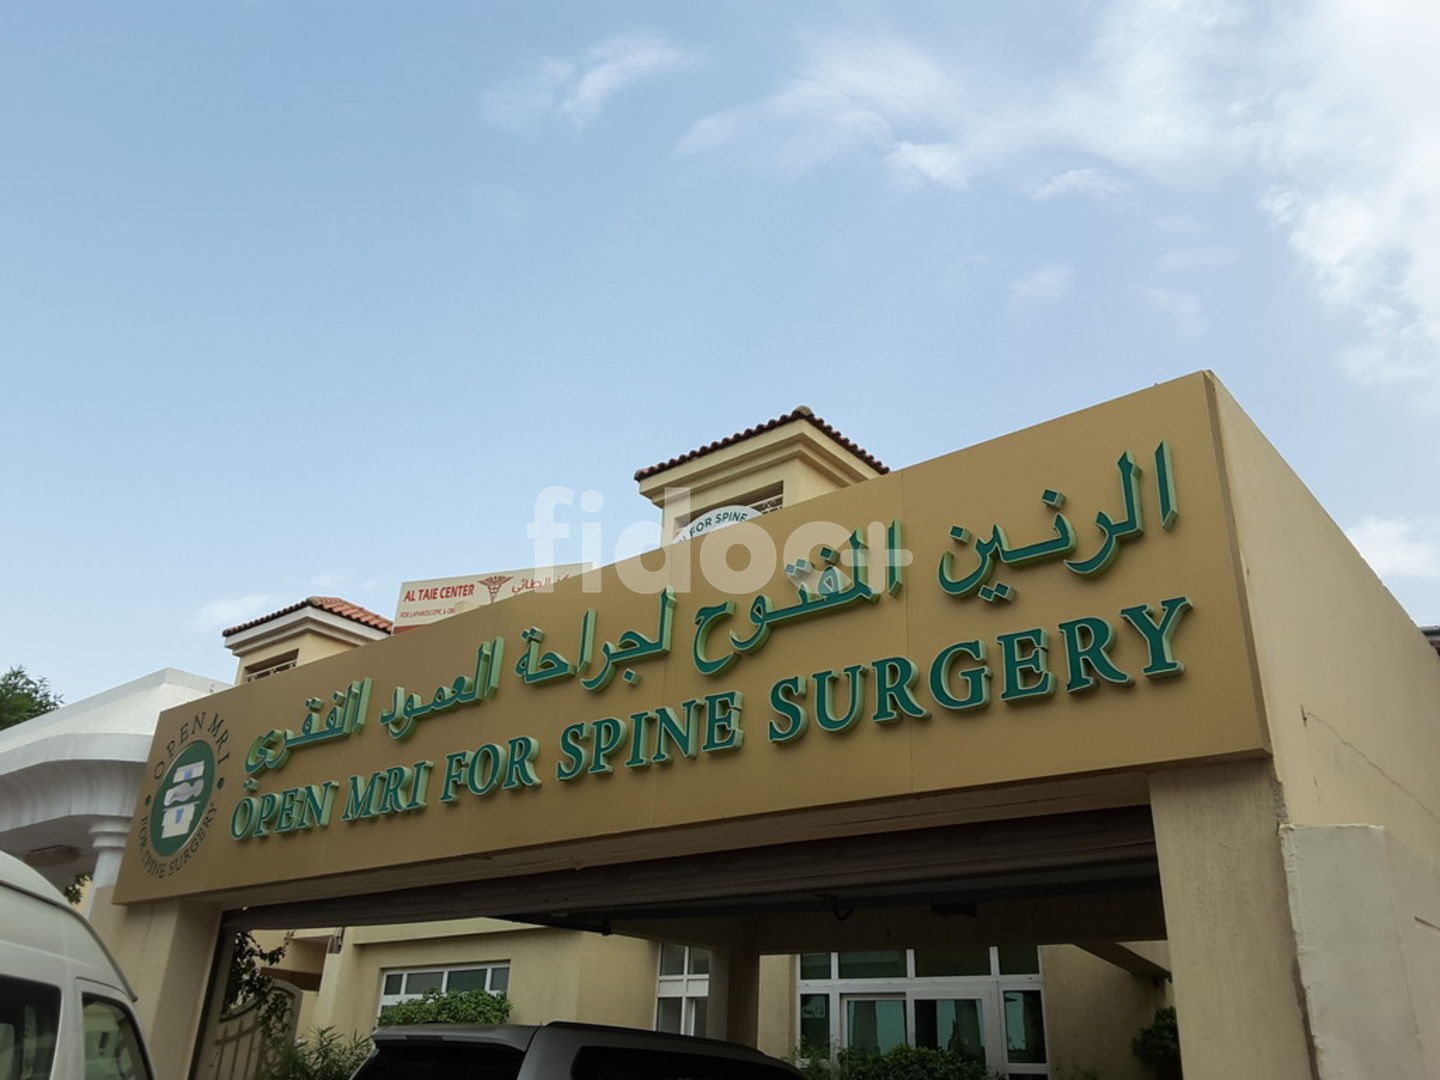 Open M R I For Spine Surgery, Dubai